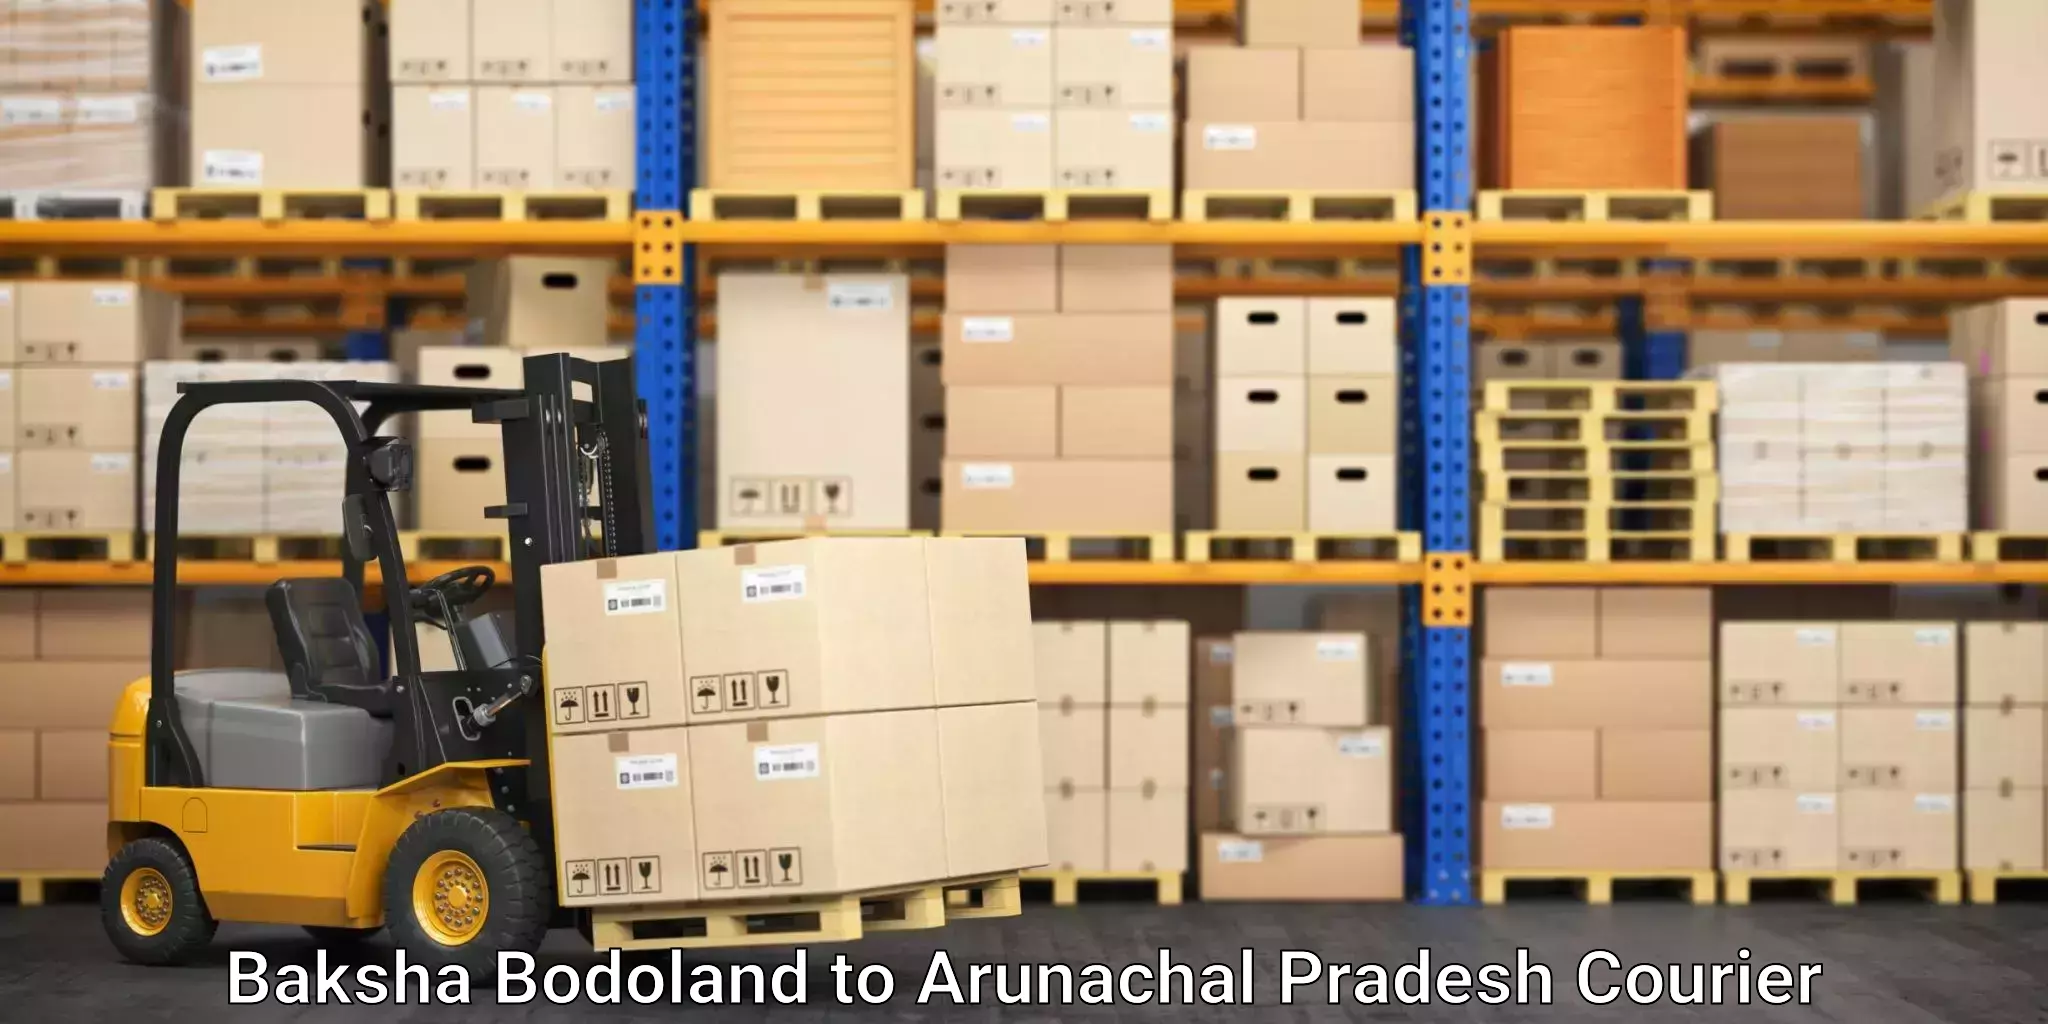 Specialized shipment handling Baksha Bodoland to Pasighat